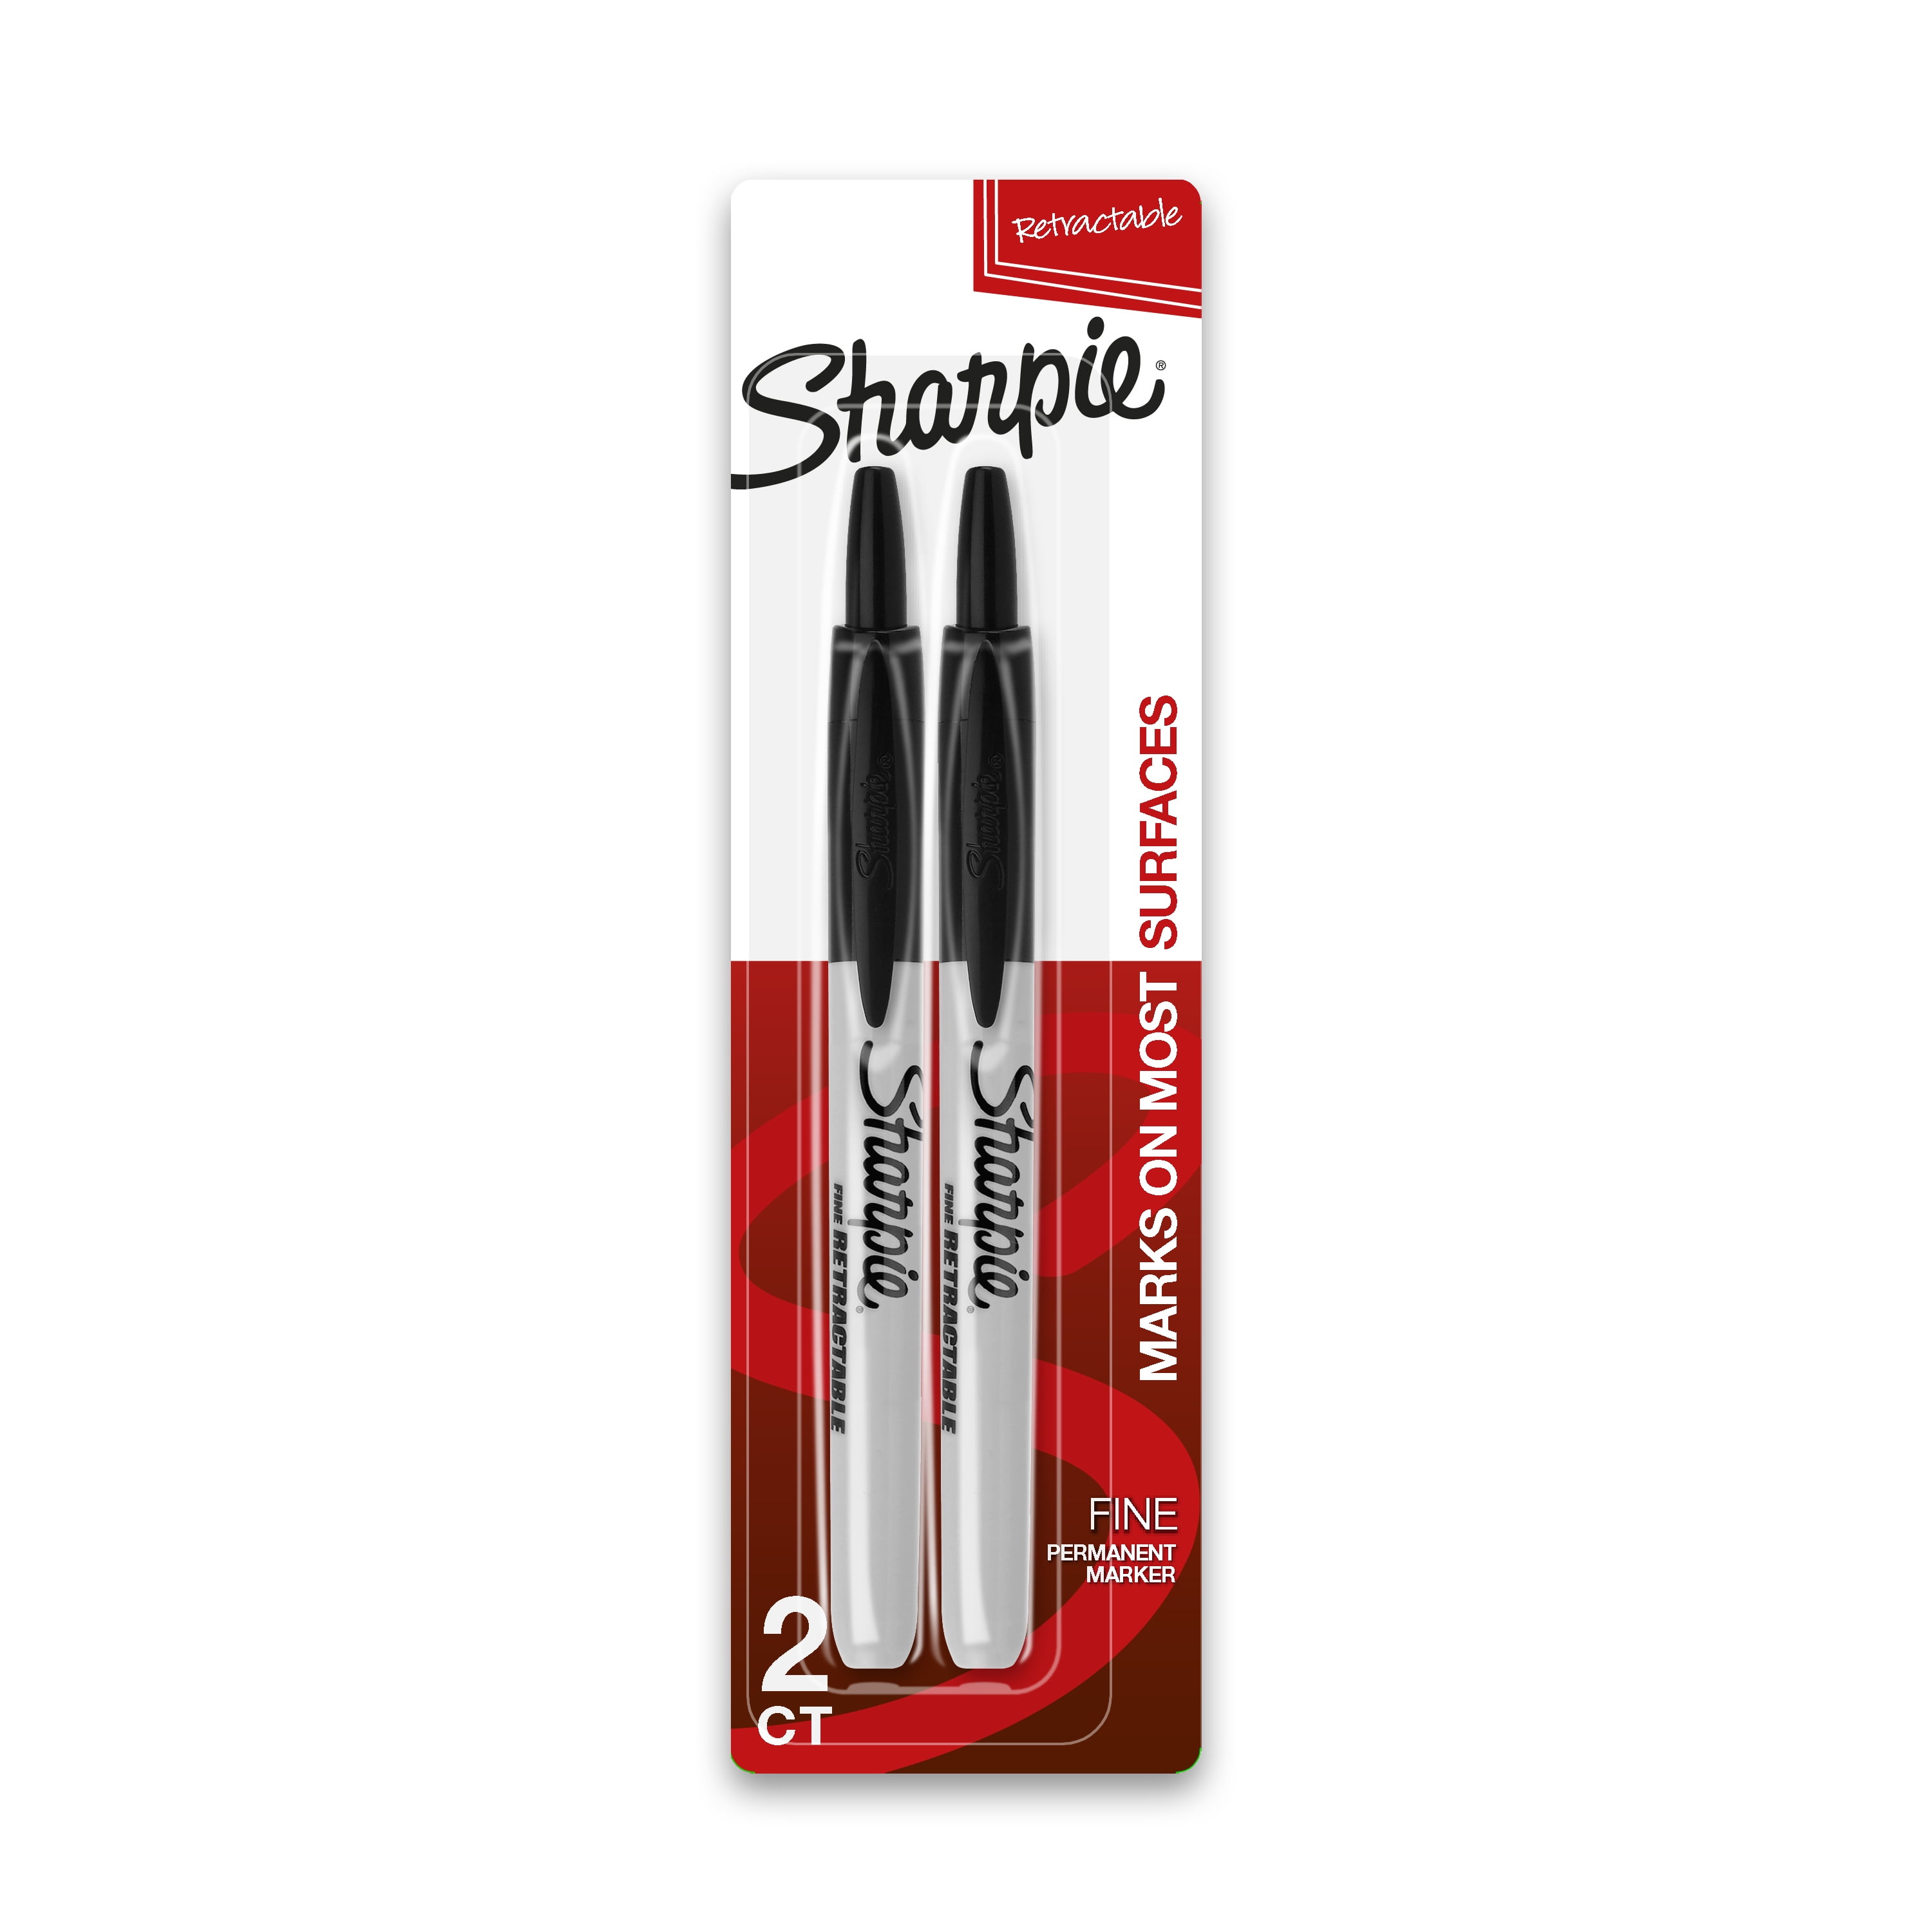  Sharpie Retractable Pen - Fine Point - Black - Pack of 2